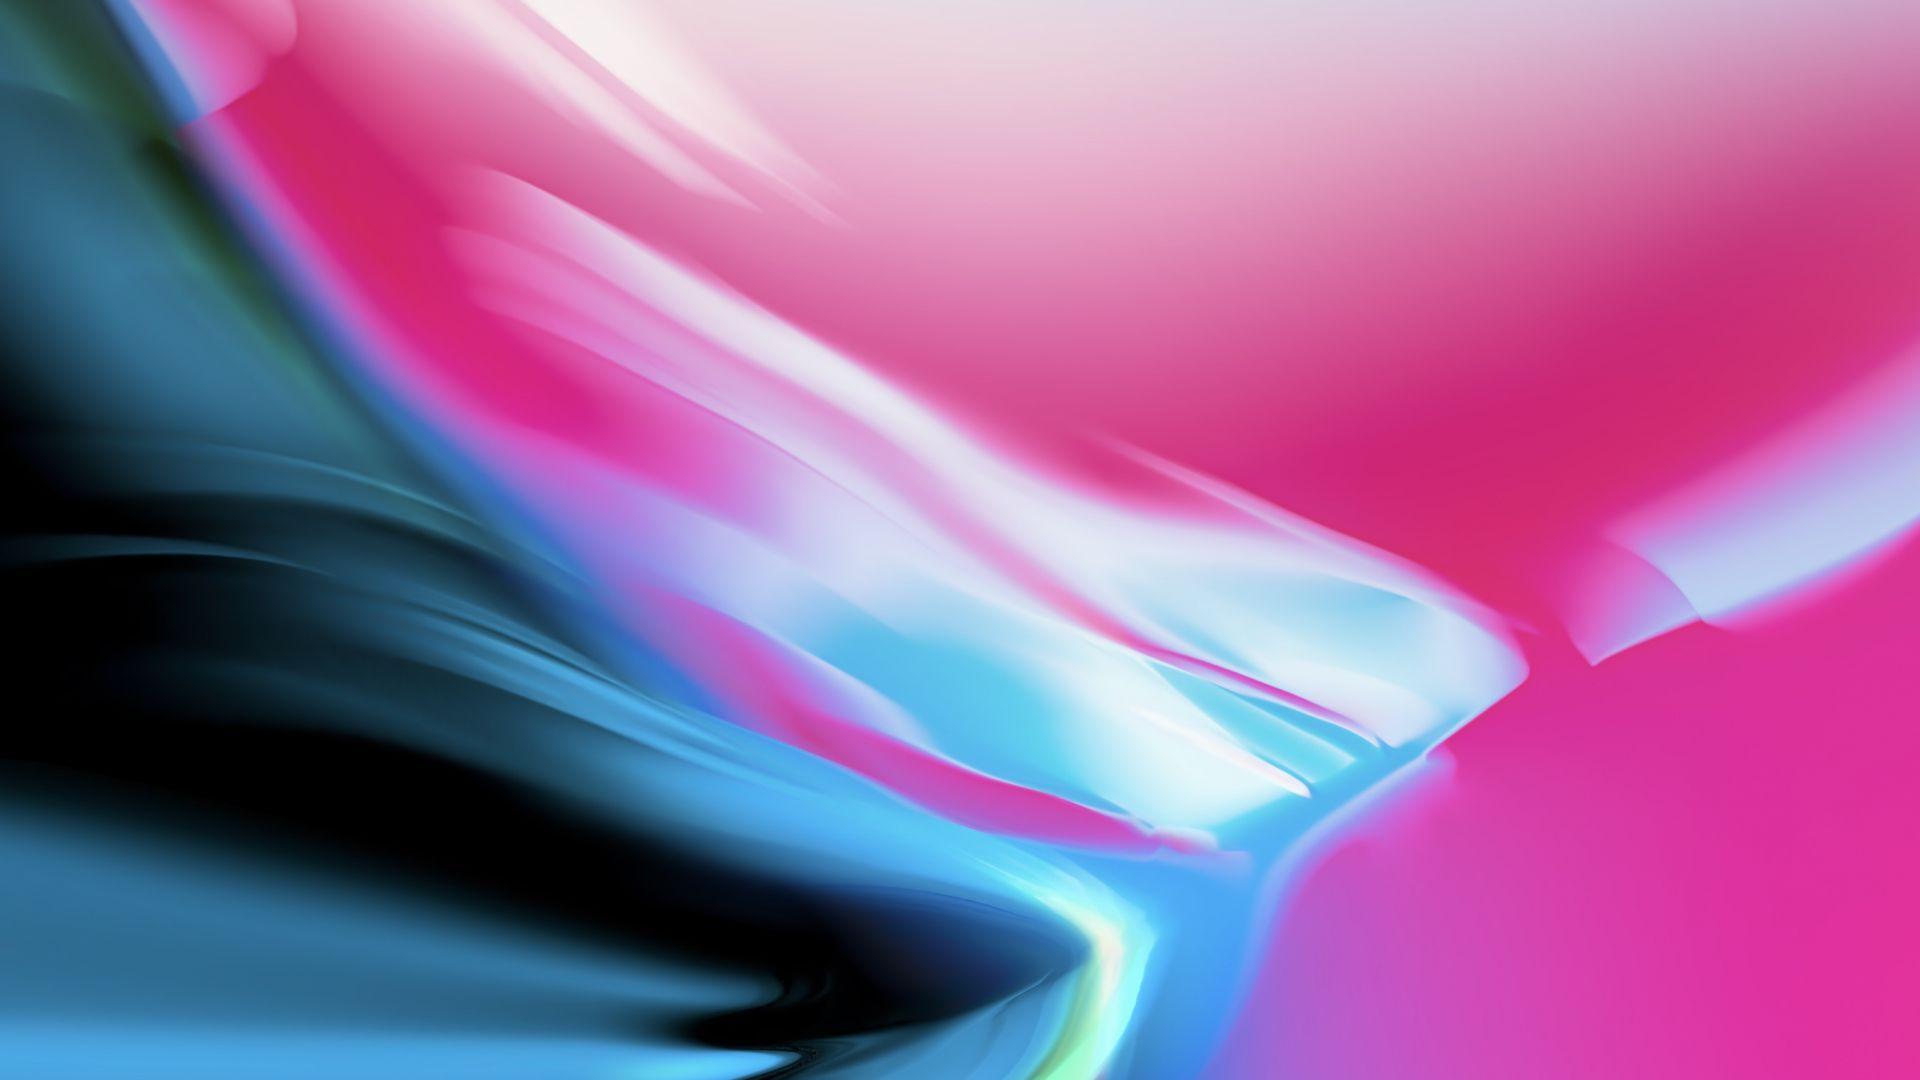 iPhone X wallpaper, iPhone iOS colorful, HD horizontal